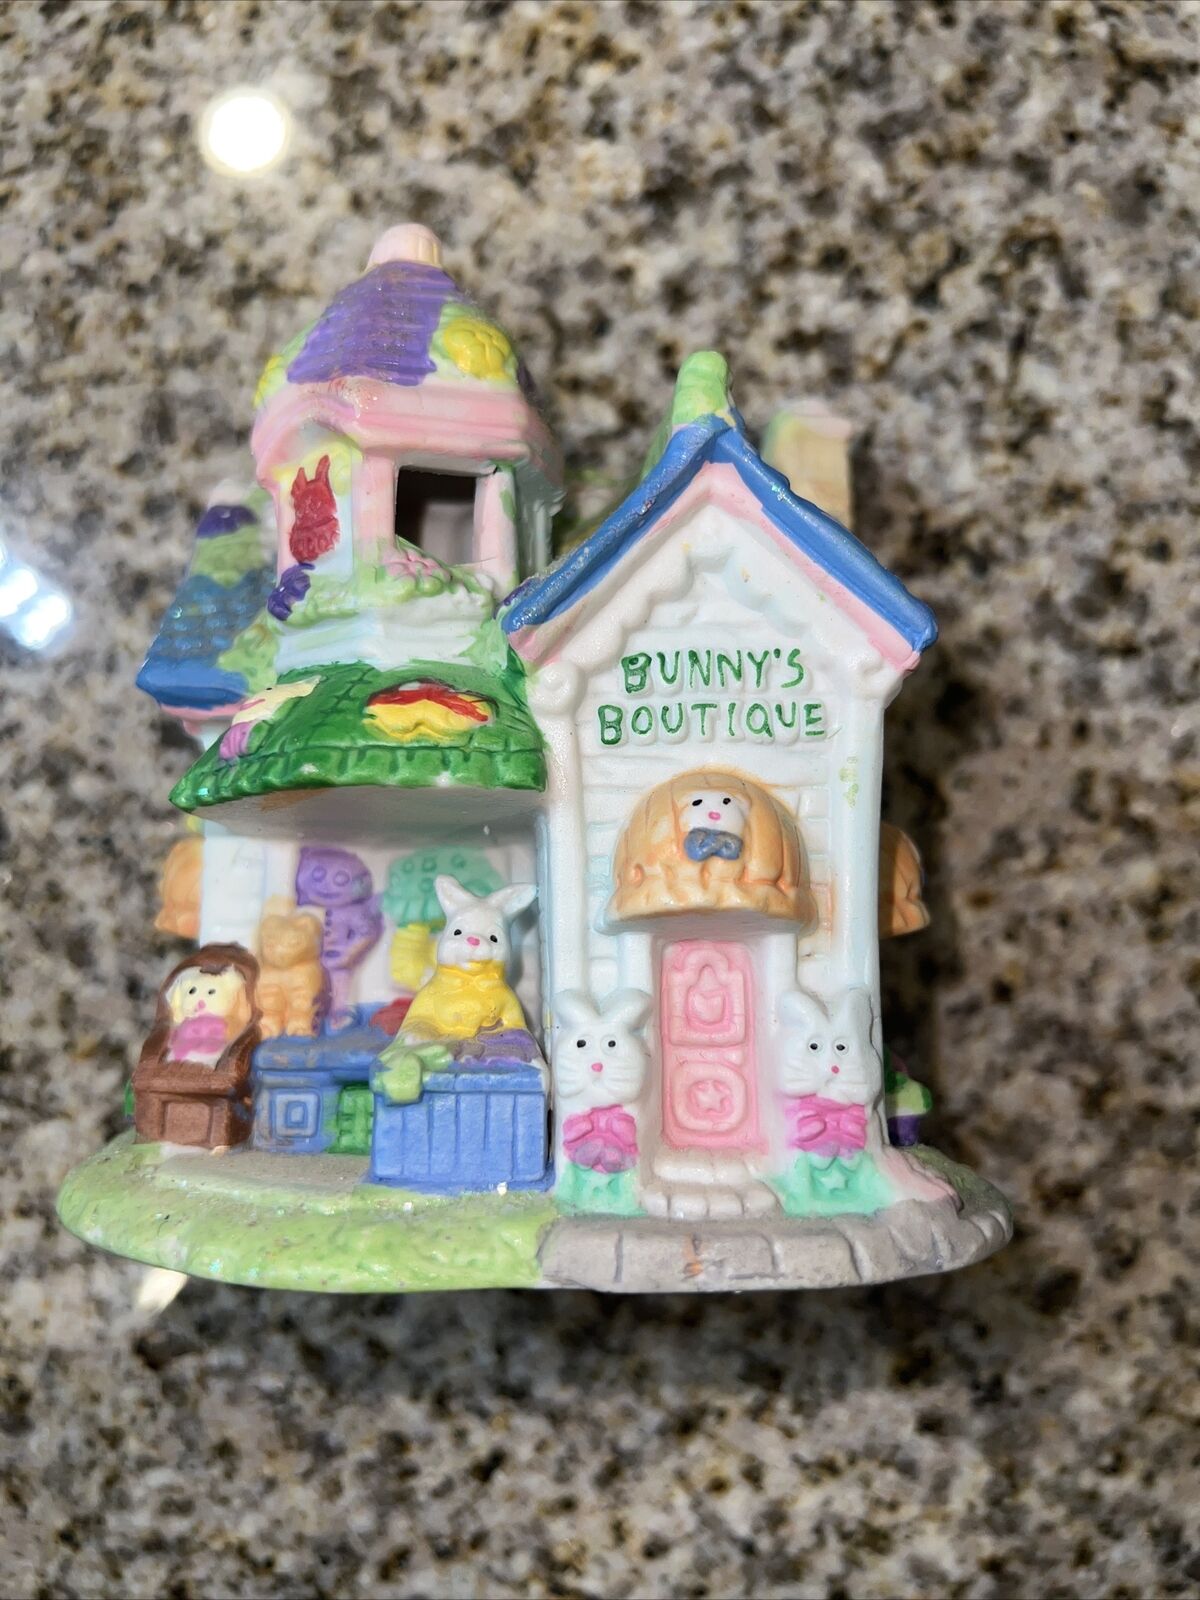 Vintage Ceramic Easter Bunny Hoppy Hollow Village House Bunnys Boutique (Mint)